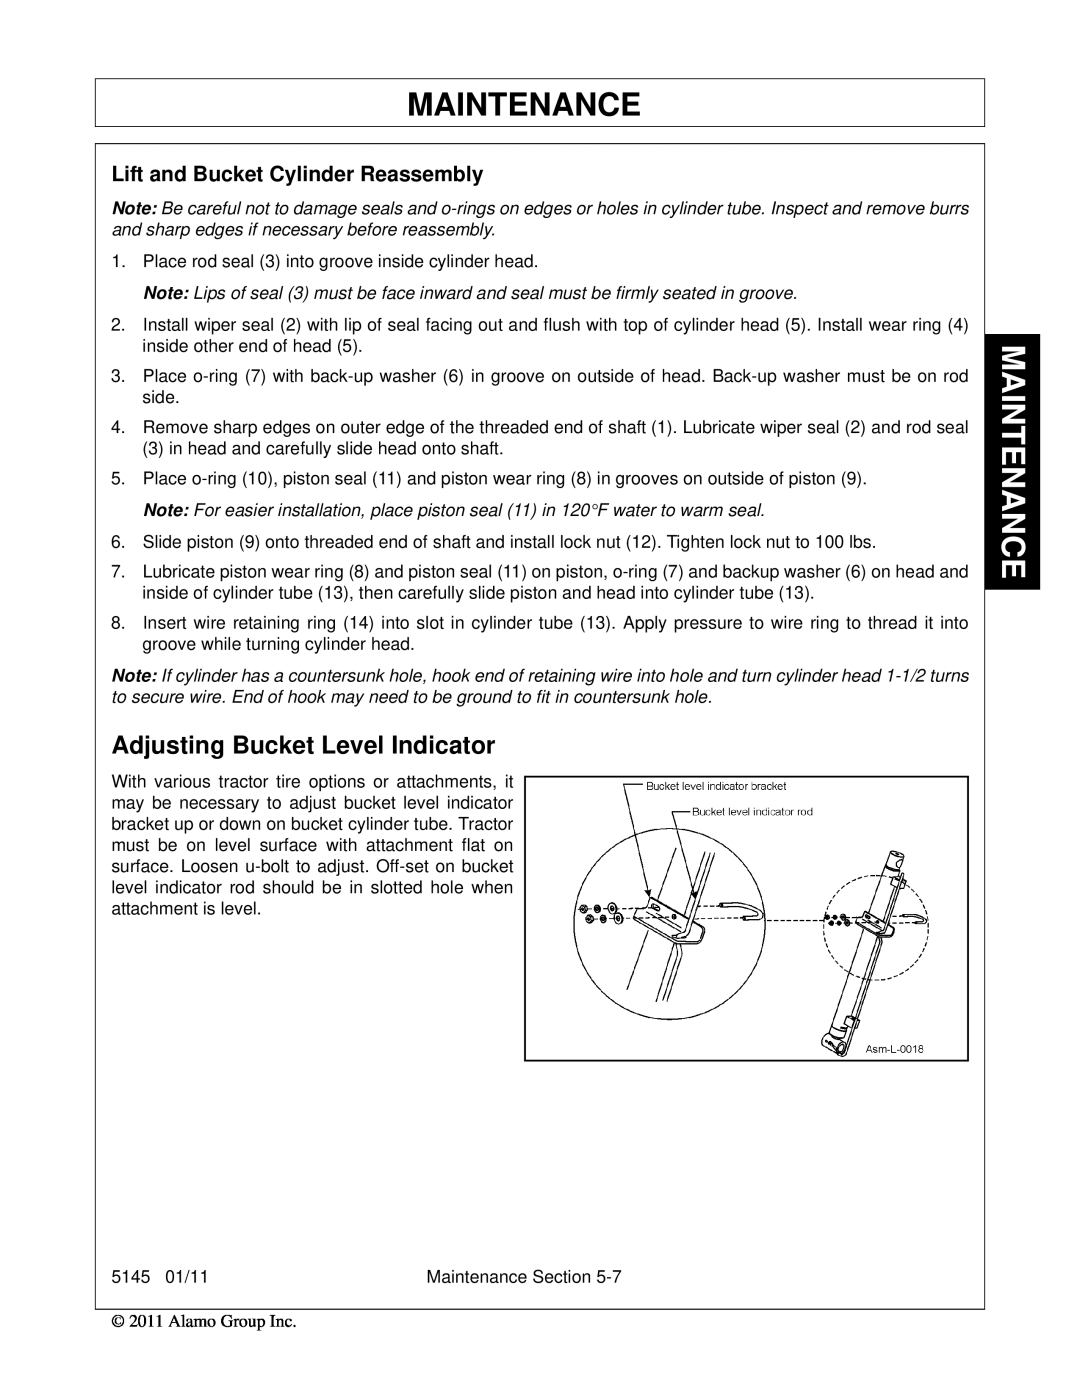 Bush Hog 5145 manual Maintenance, Adjusting Bucket Level Indicator, Lift and Bucket Cylinder Reassembly 